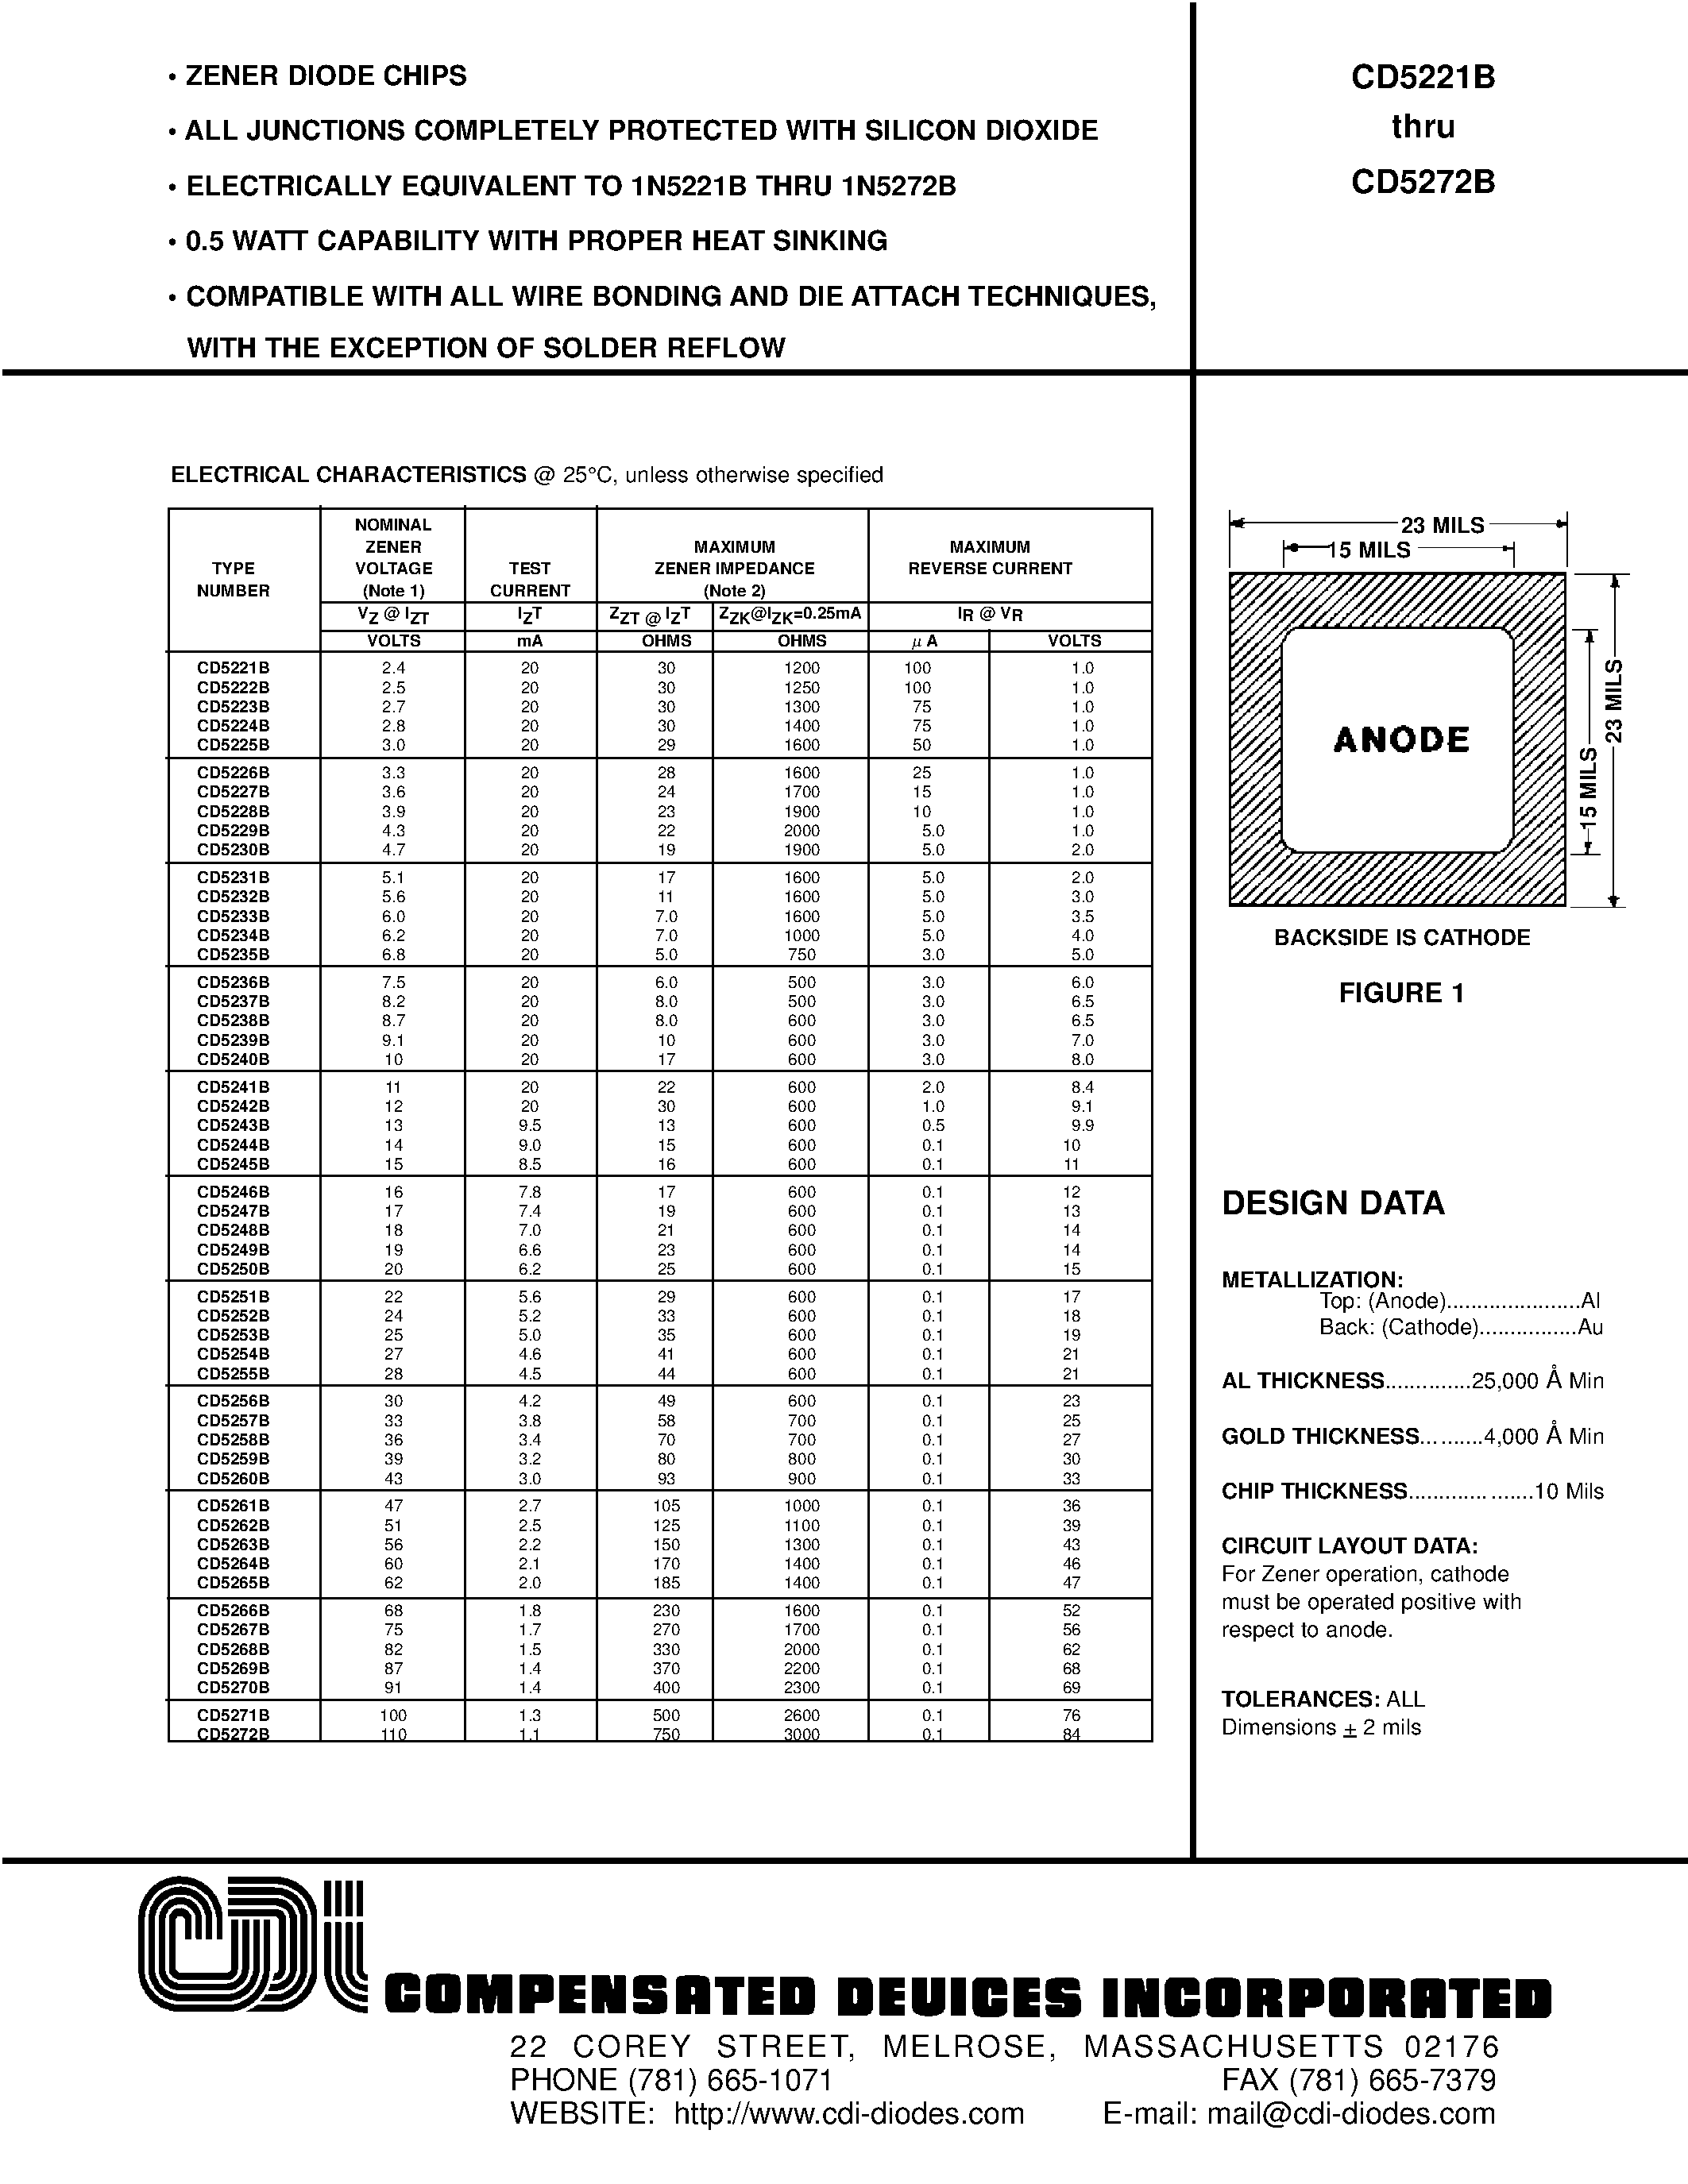 Datasheet CD5221B - ZENER DIODE CHIPS page 1